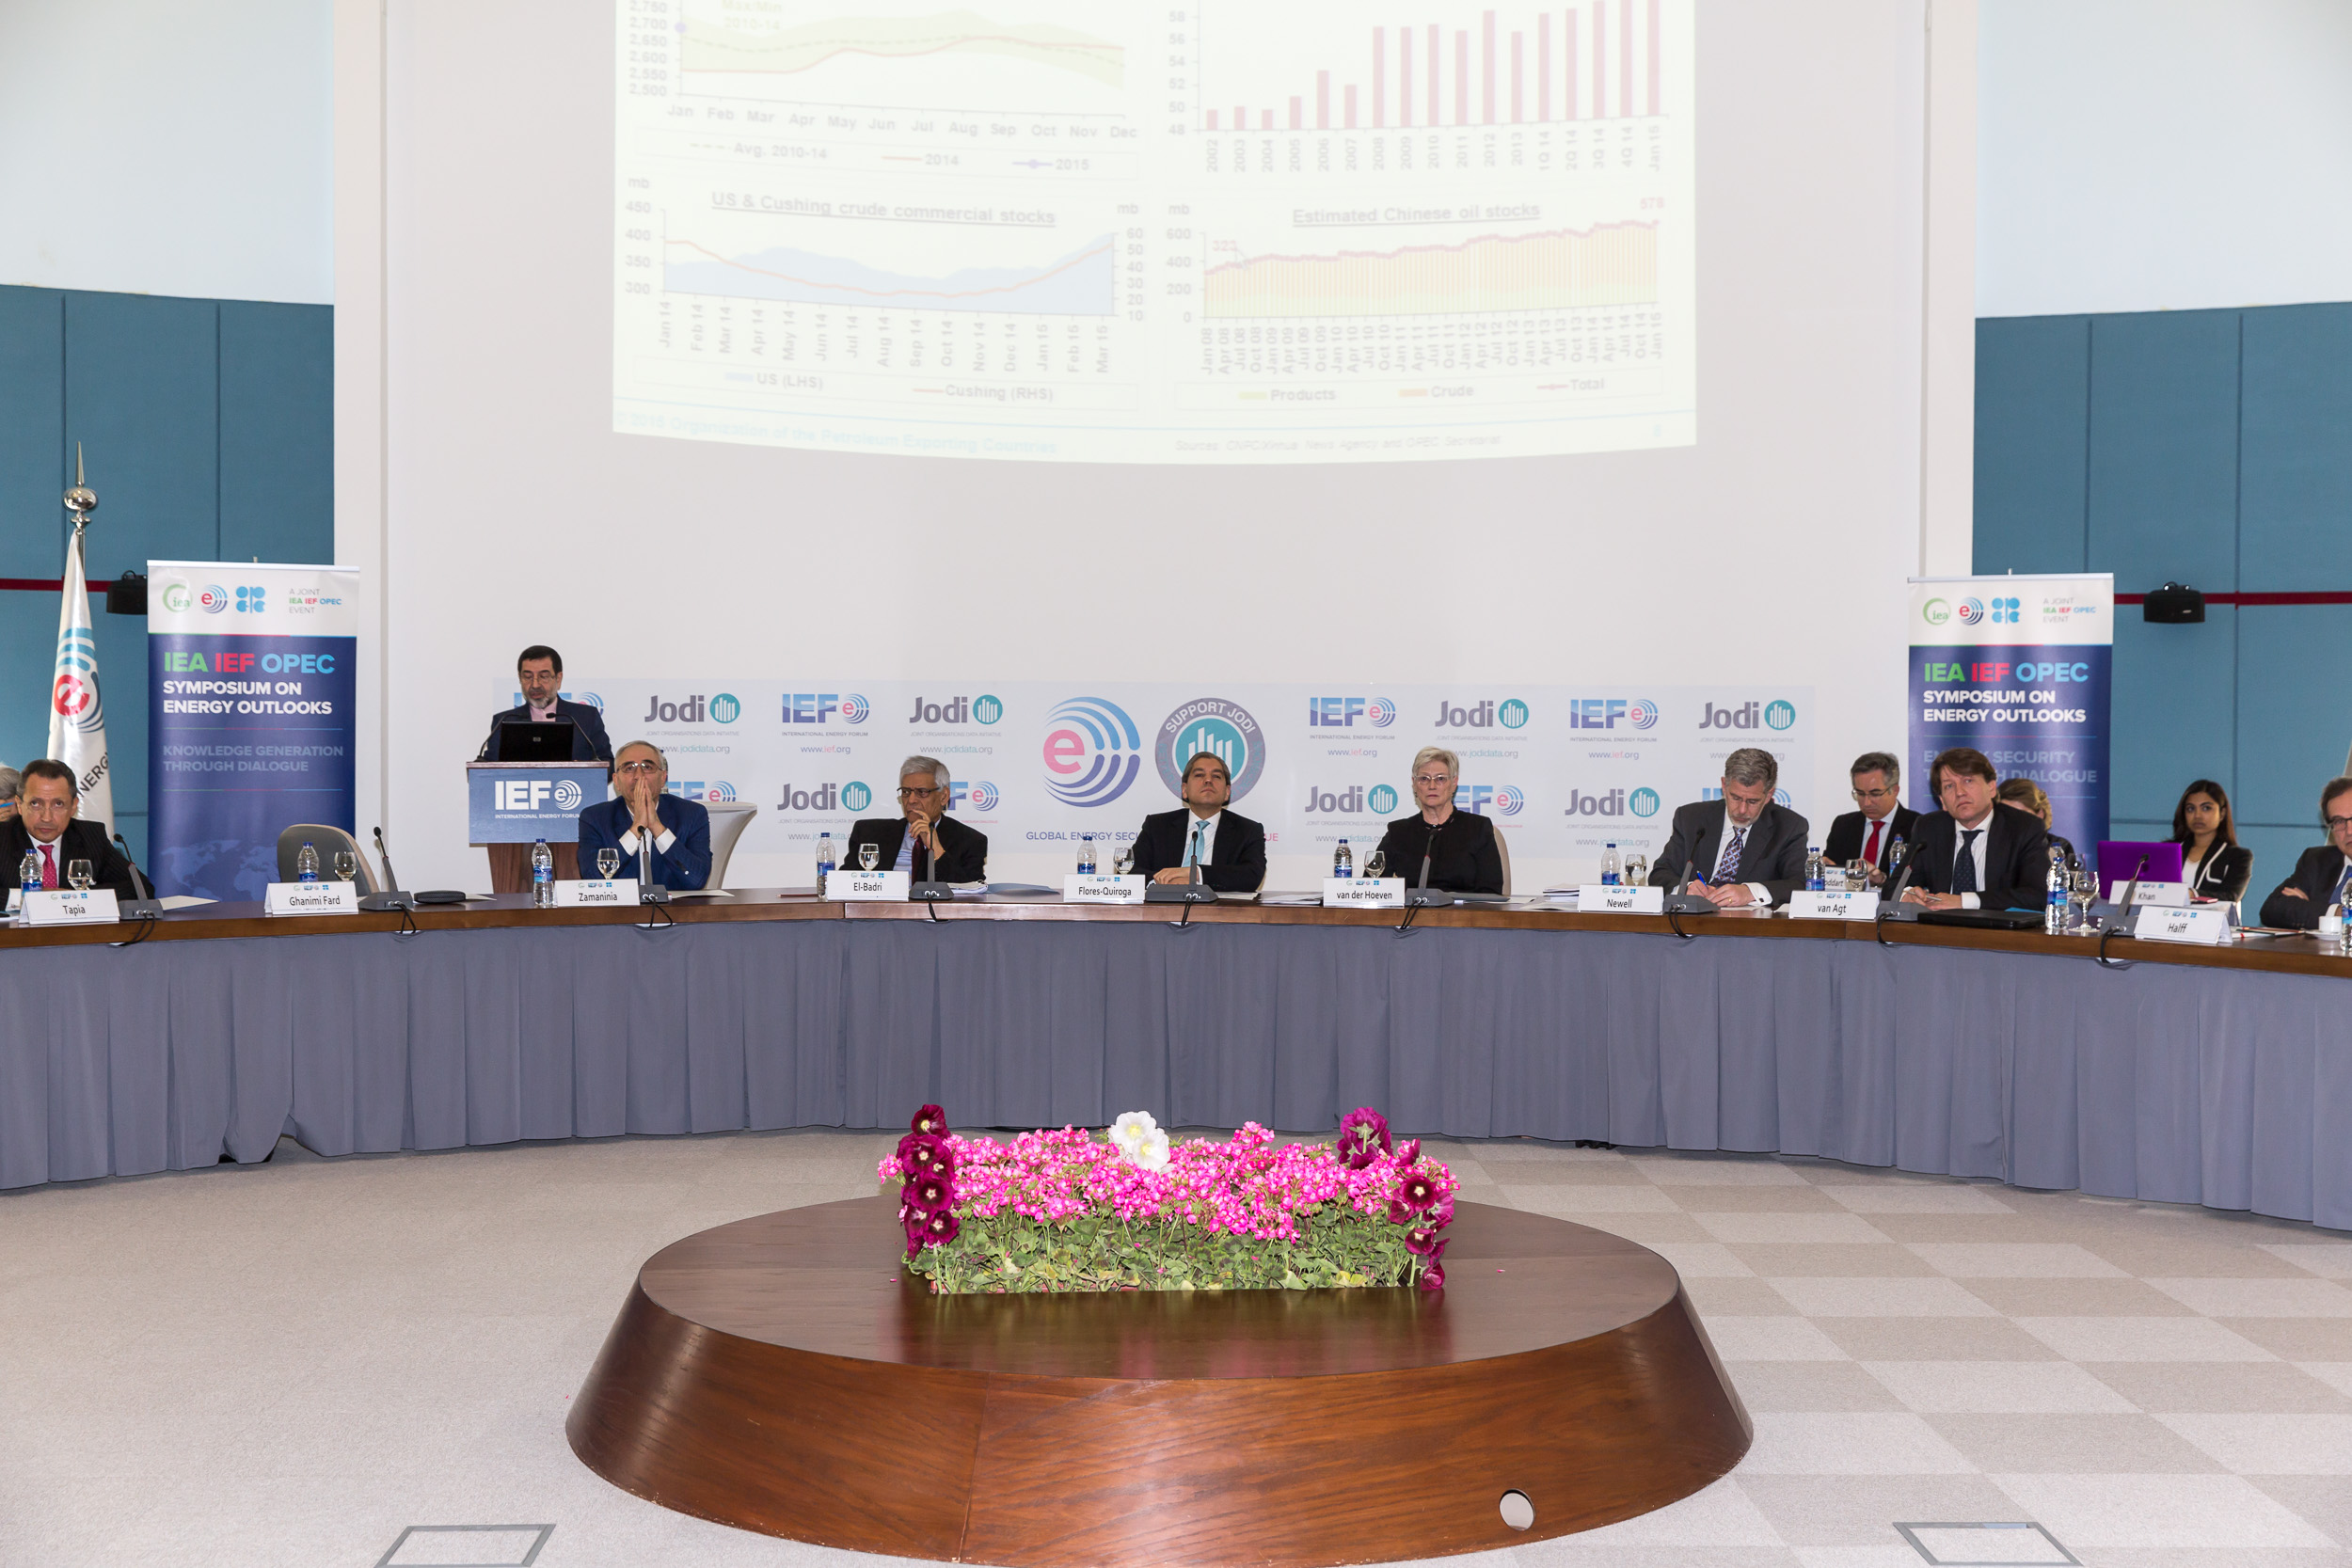 IEA IEF OPEC Symposium_21021